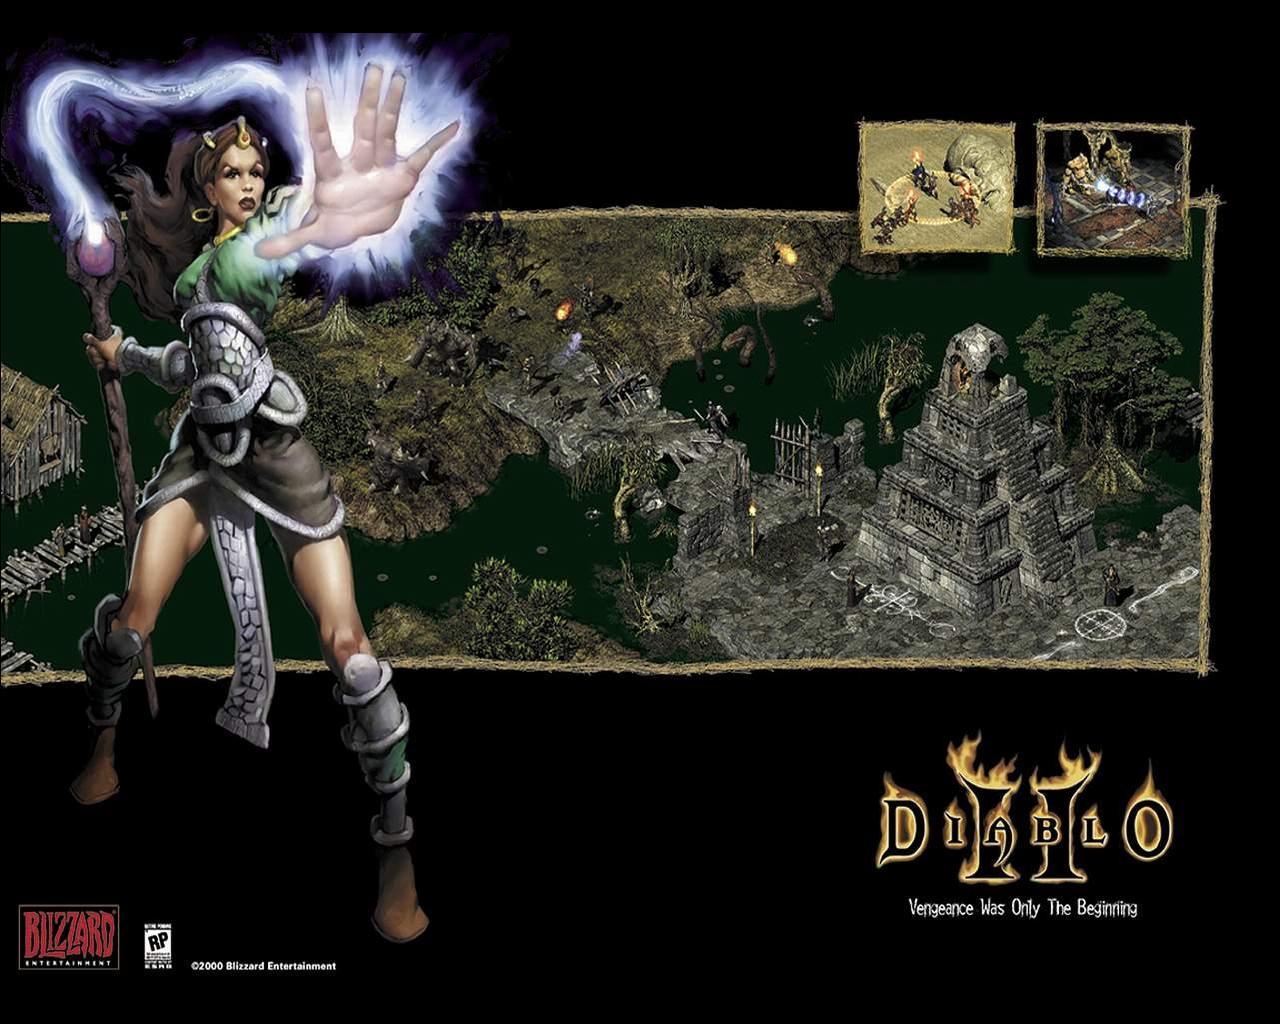 Desktop Wallpaper Diablo Diablo 2 vdeo game